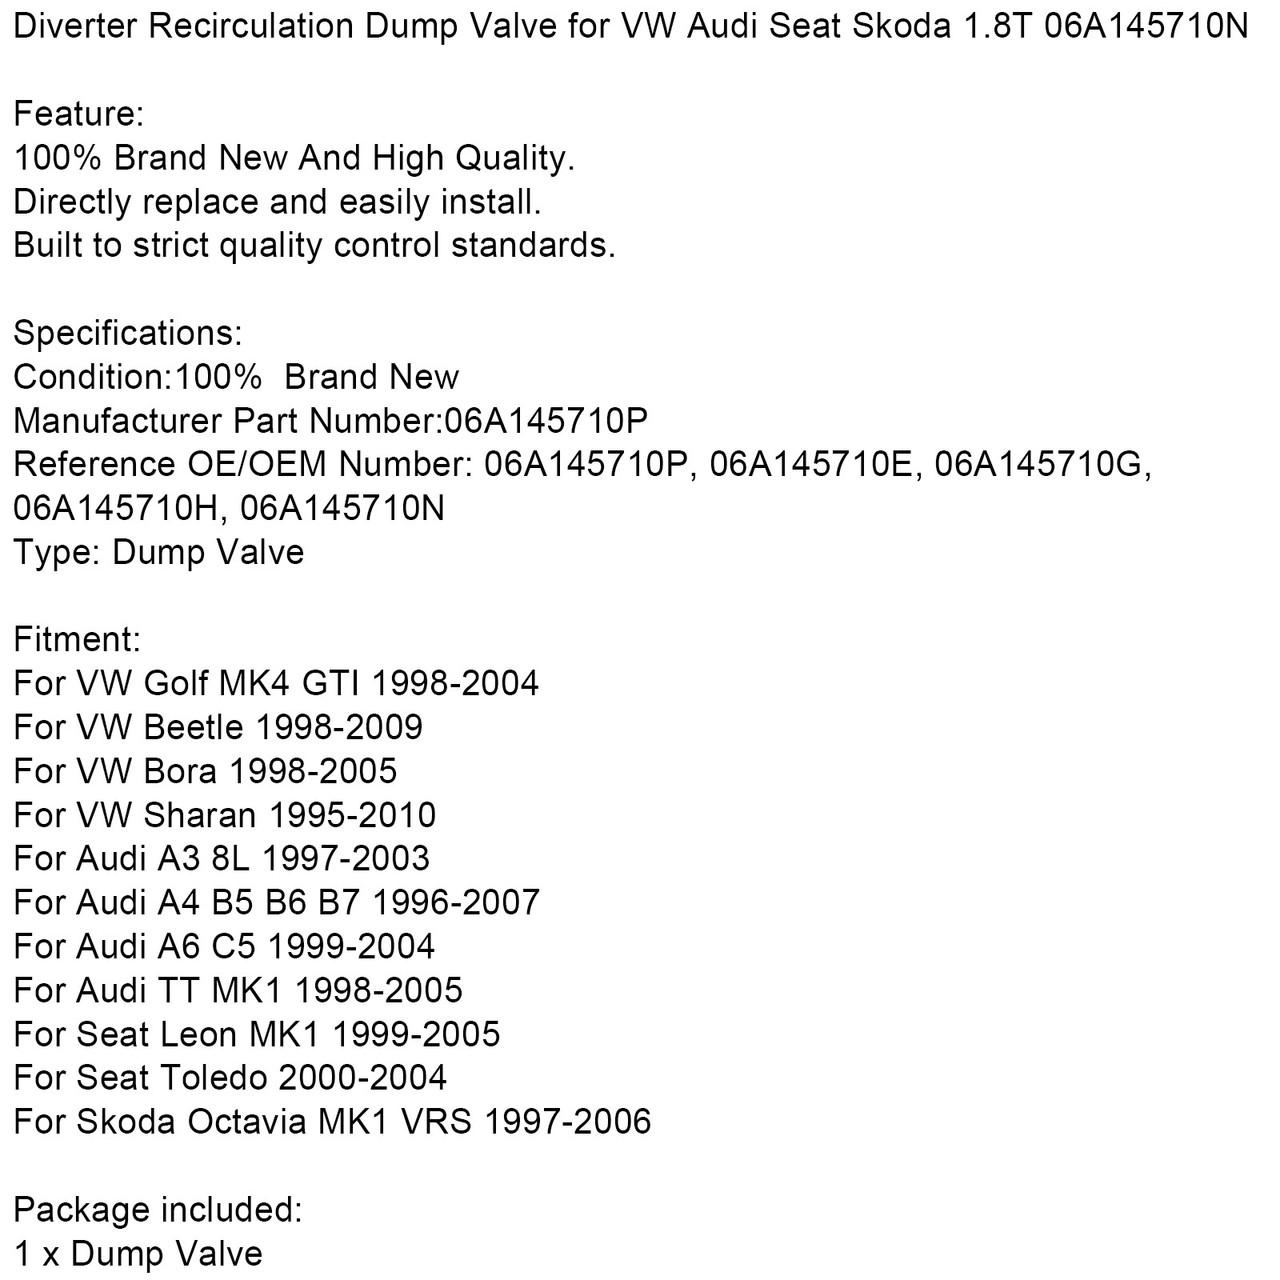 Diverter Recirculation Dump Valve Fit for Audi A3 8L 97-03 A4 B5 B6 B7 96-07 A6 C5 99-04 TT MK1 98-05